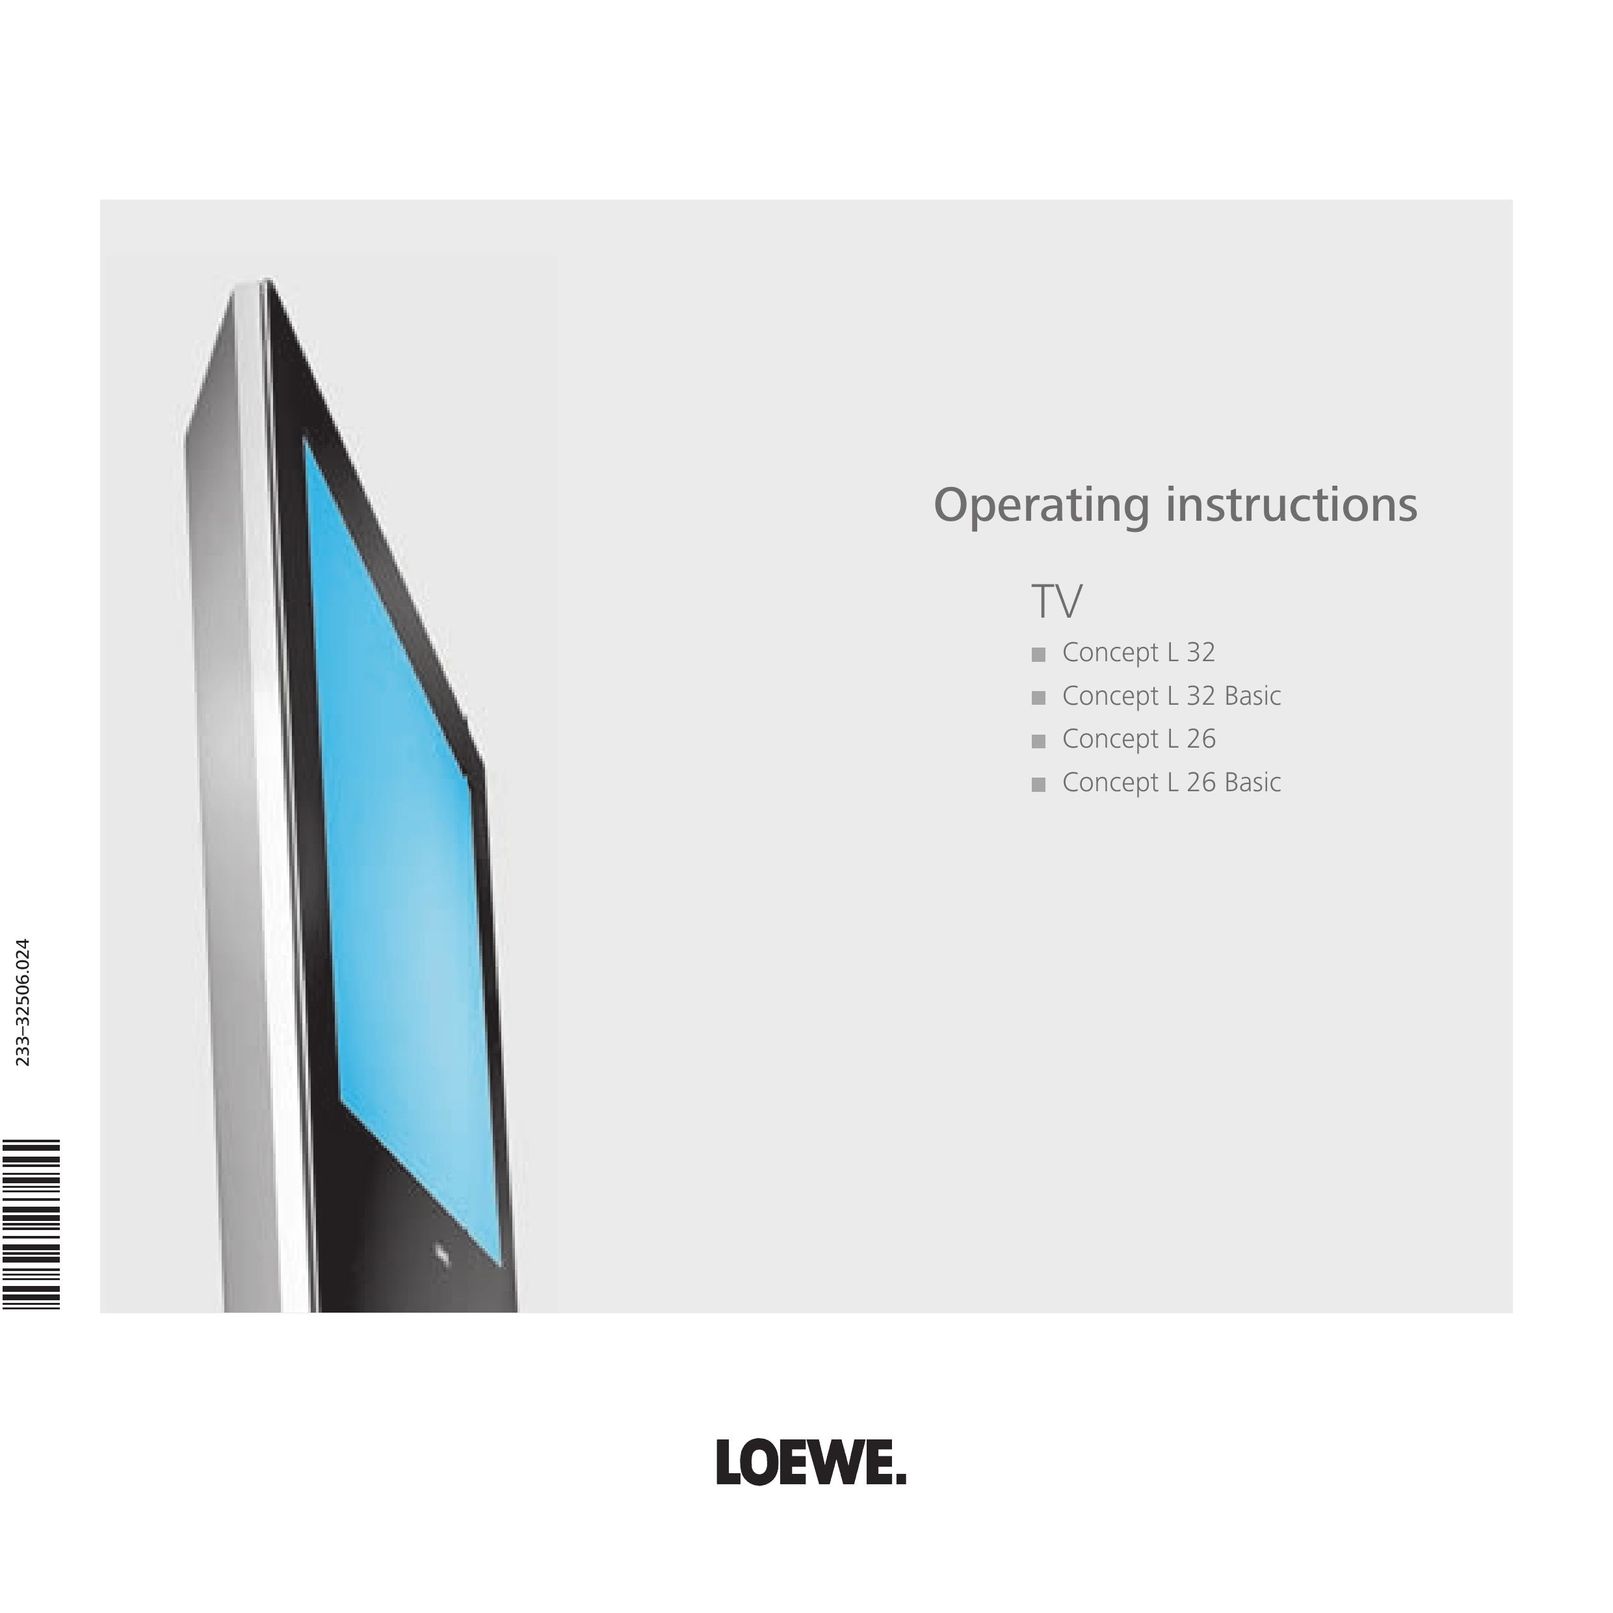 Loewe ConceptL26 Flat Panel Television User Manual